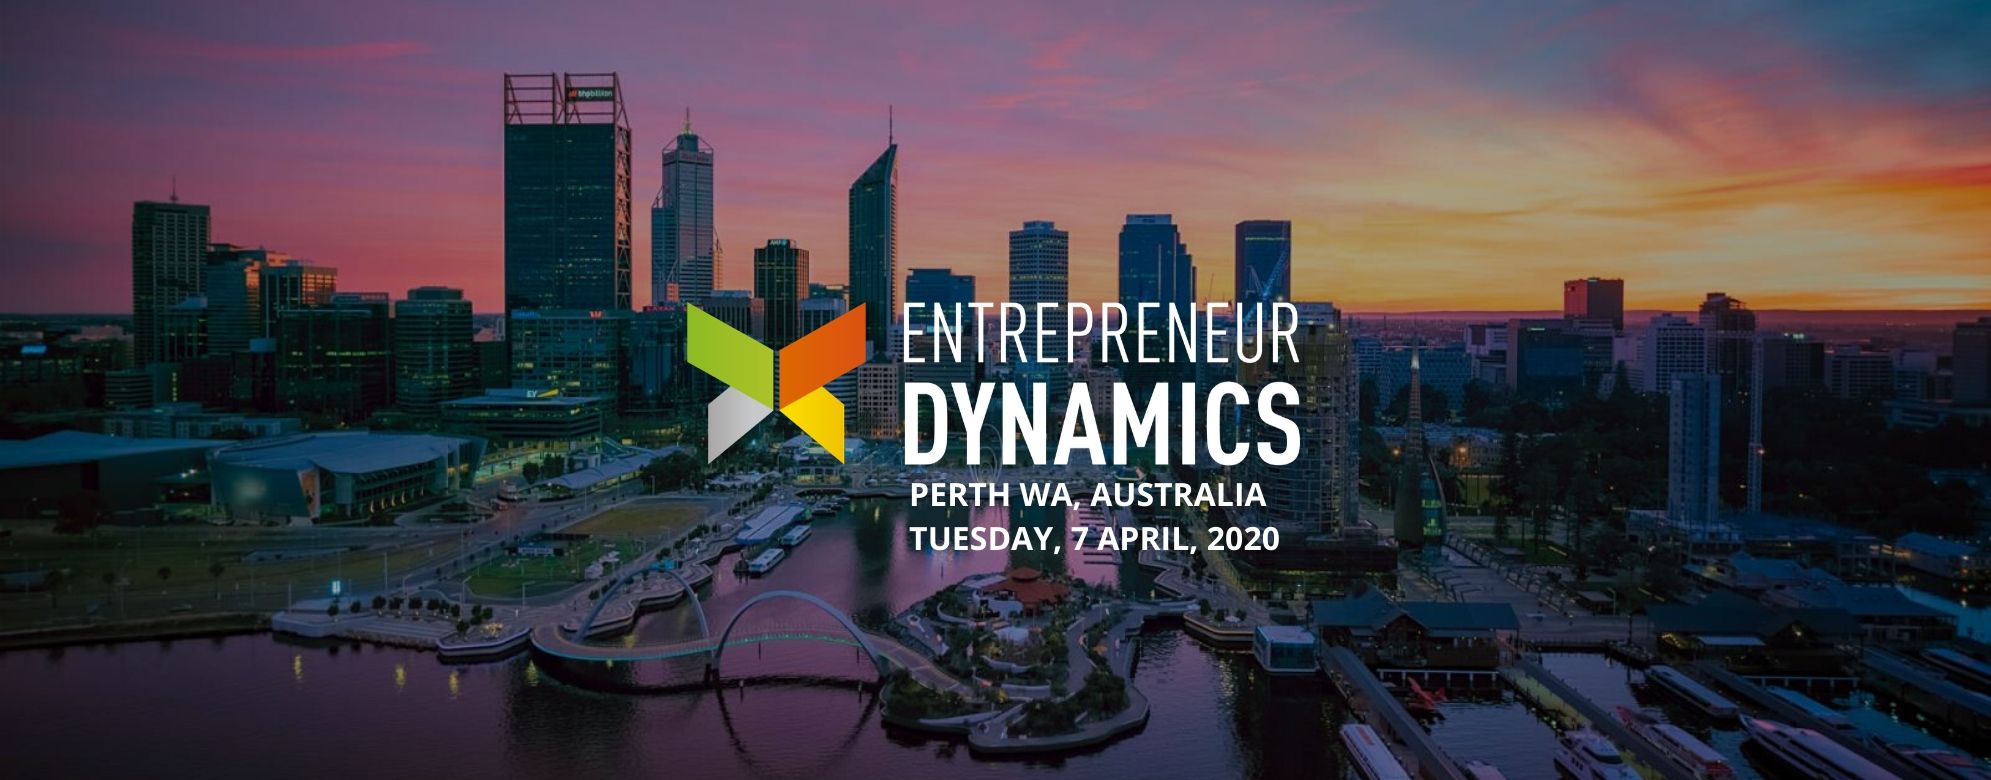 Entrepreneur Dynamics - Perth, Perth, Western Australia, Australia